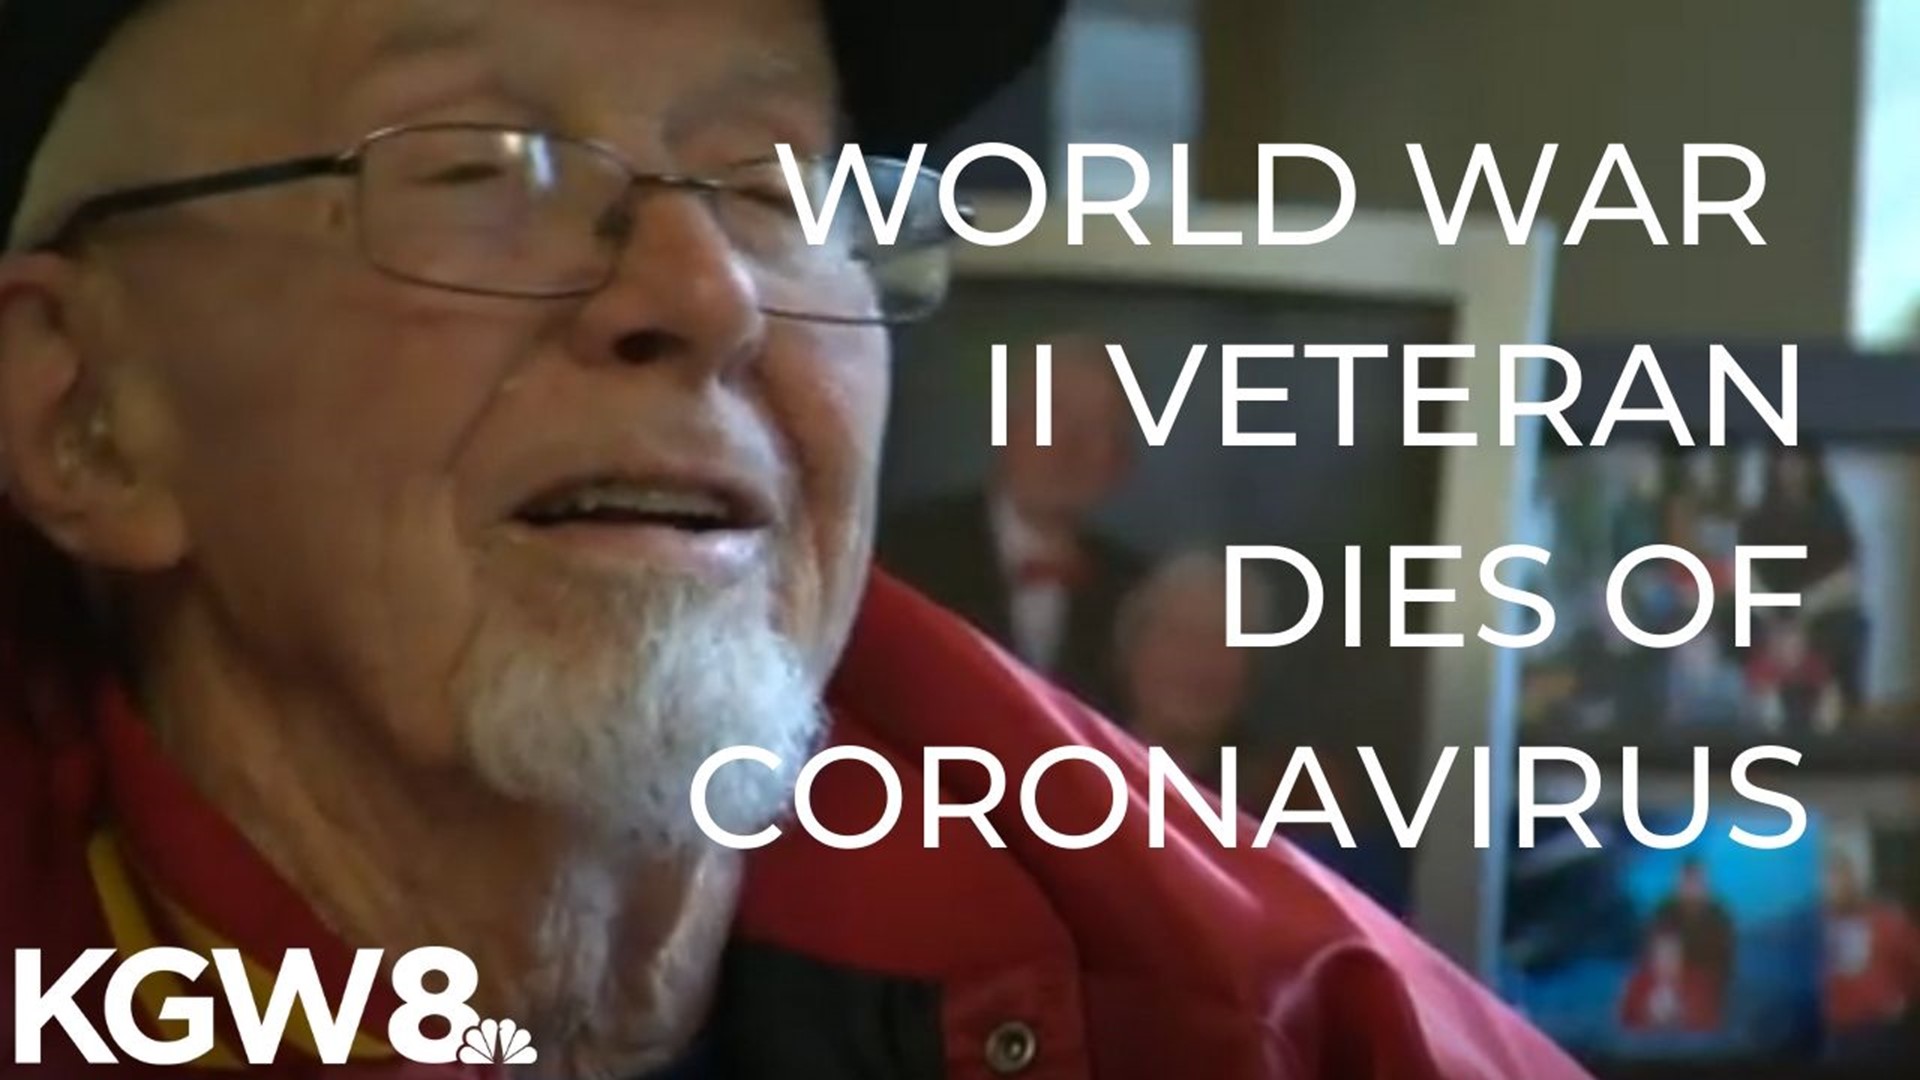 Remembering Robin Barrett. The World War II veteran died of COVID-19.